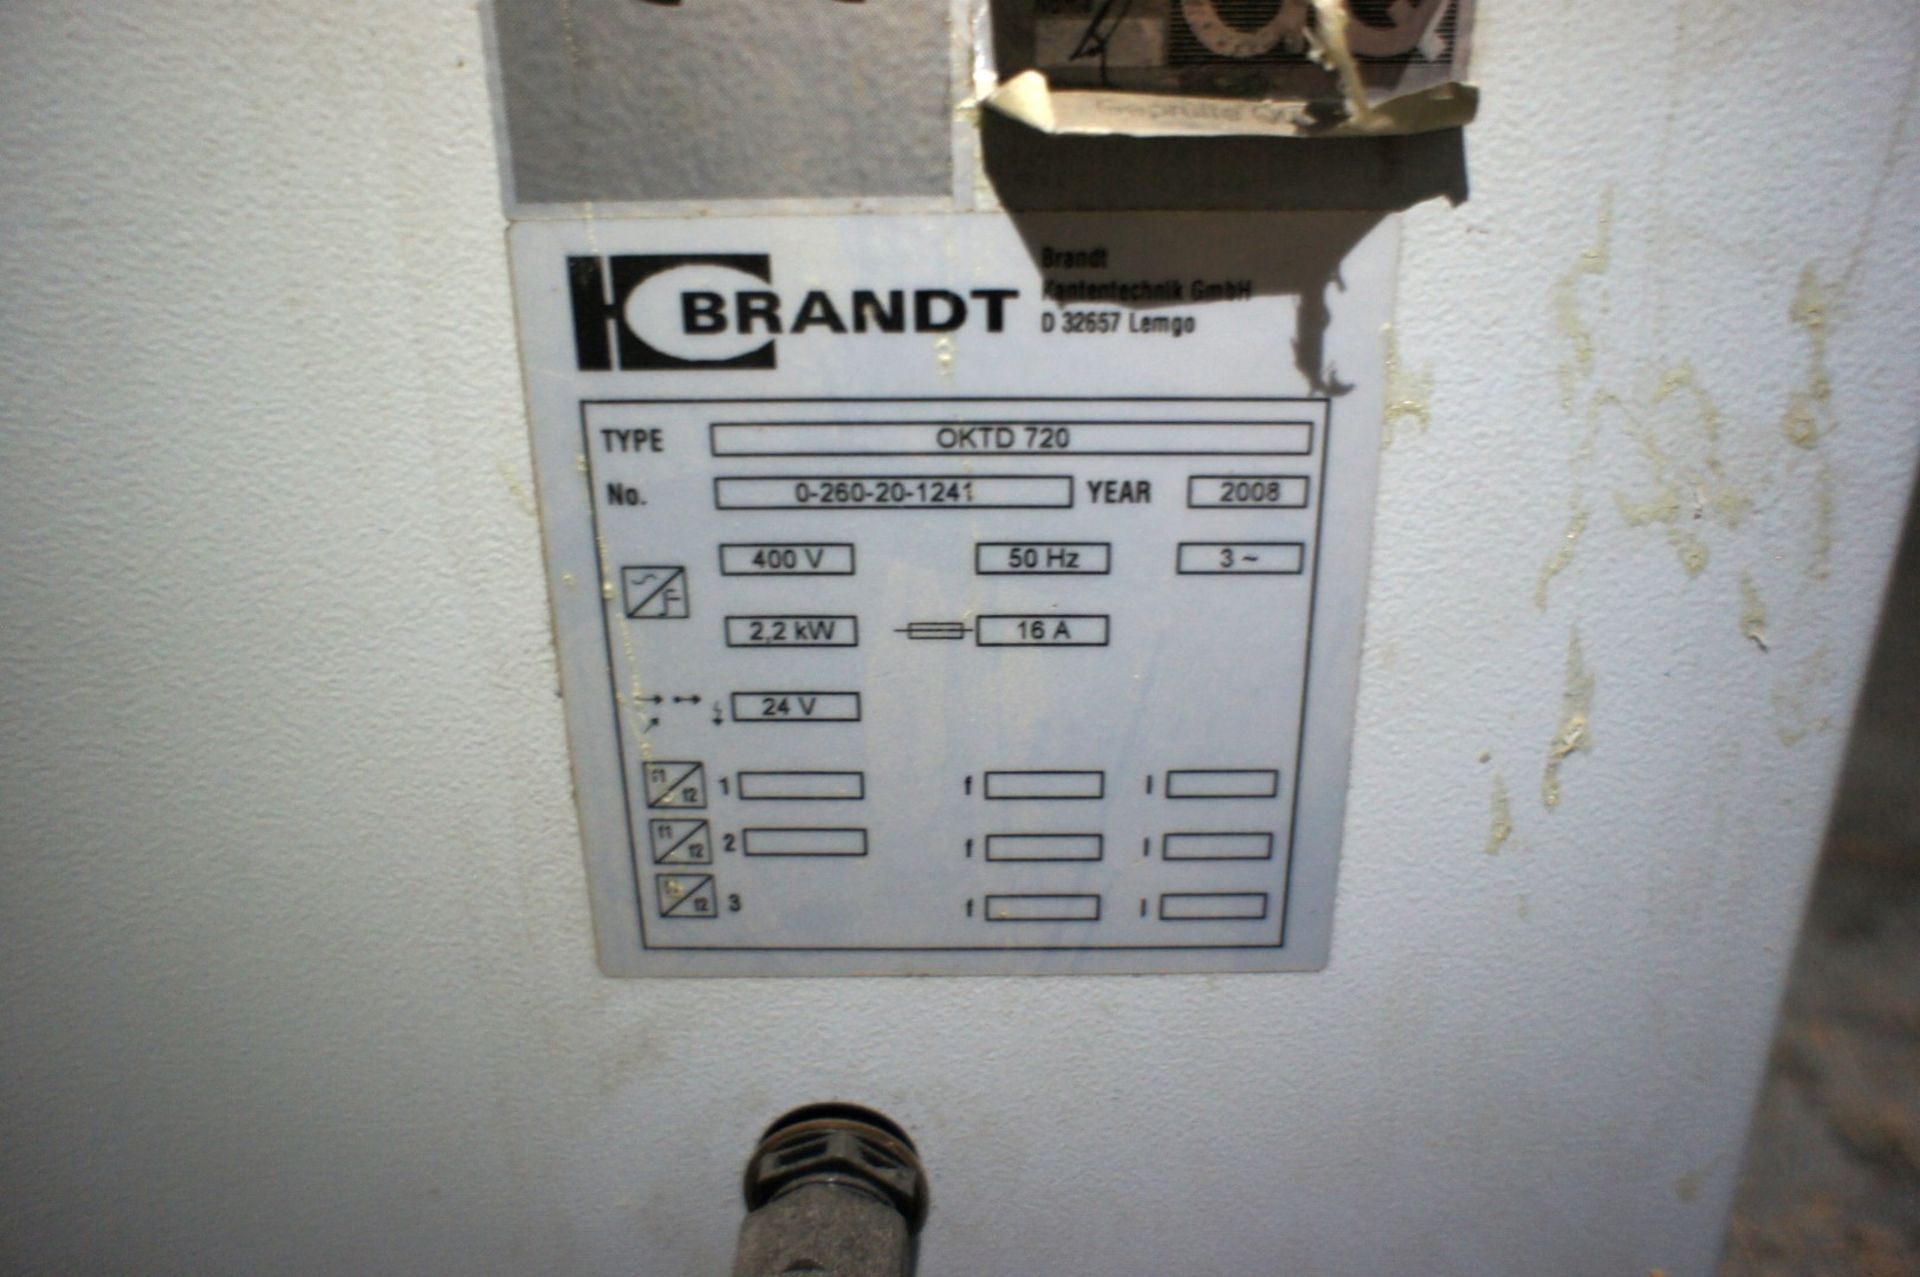 * Brandt Optimat OKTD720 serial No 0-260-20-1241 Profile Edging Machine YOM 2008. Please note - Image 8 of 8